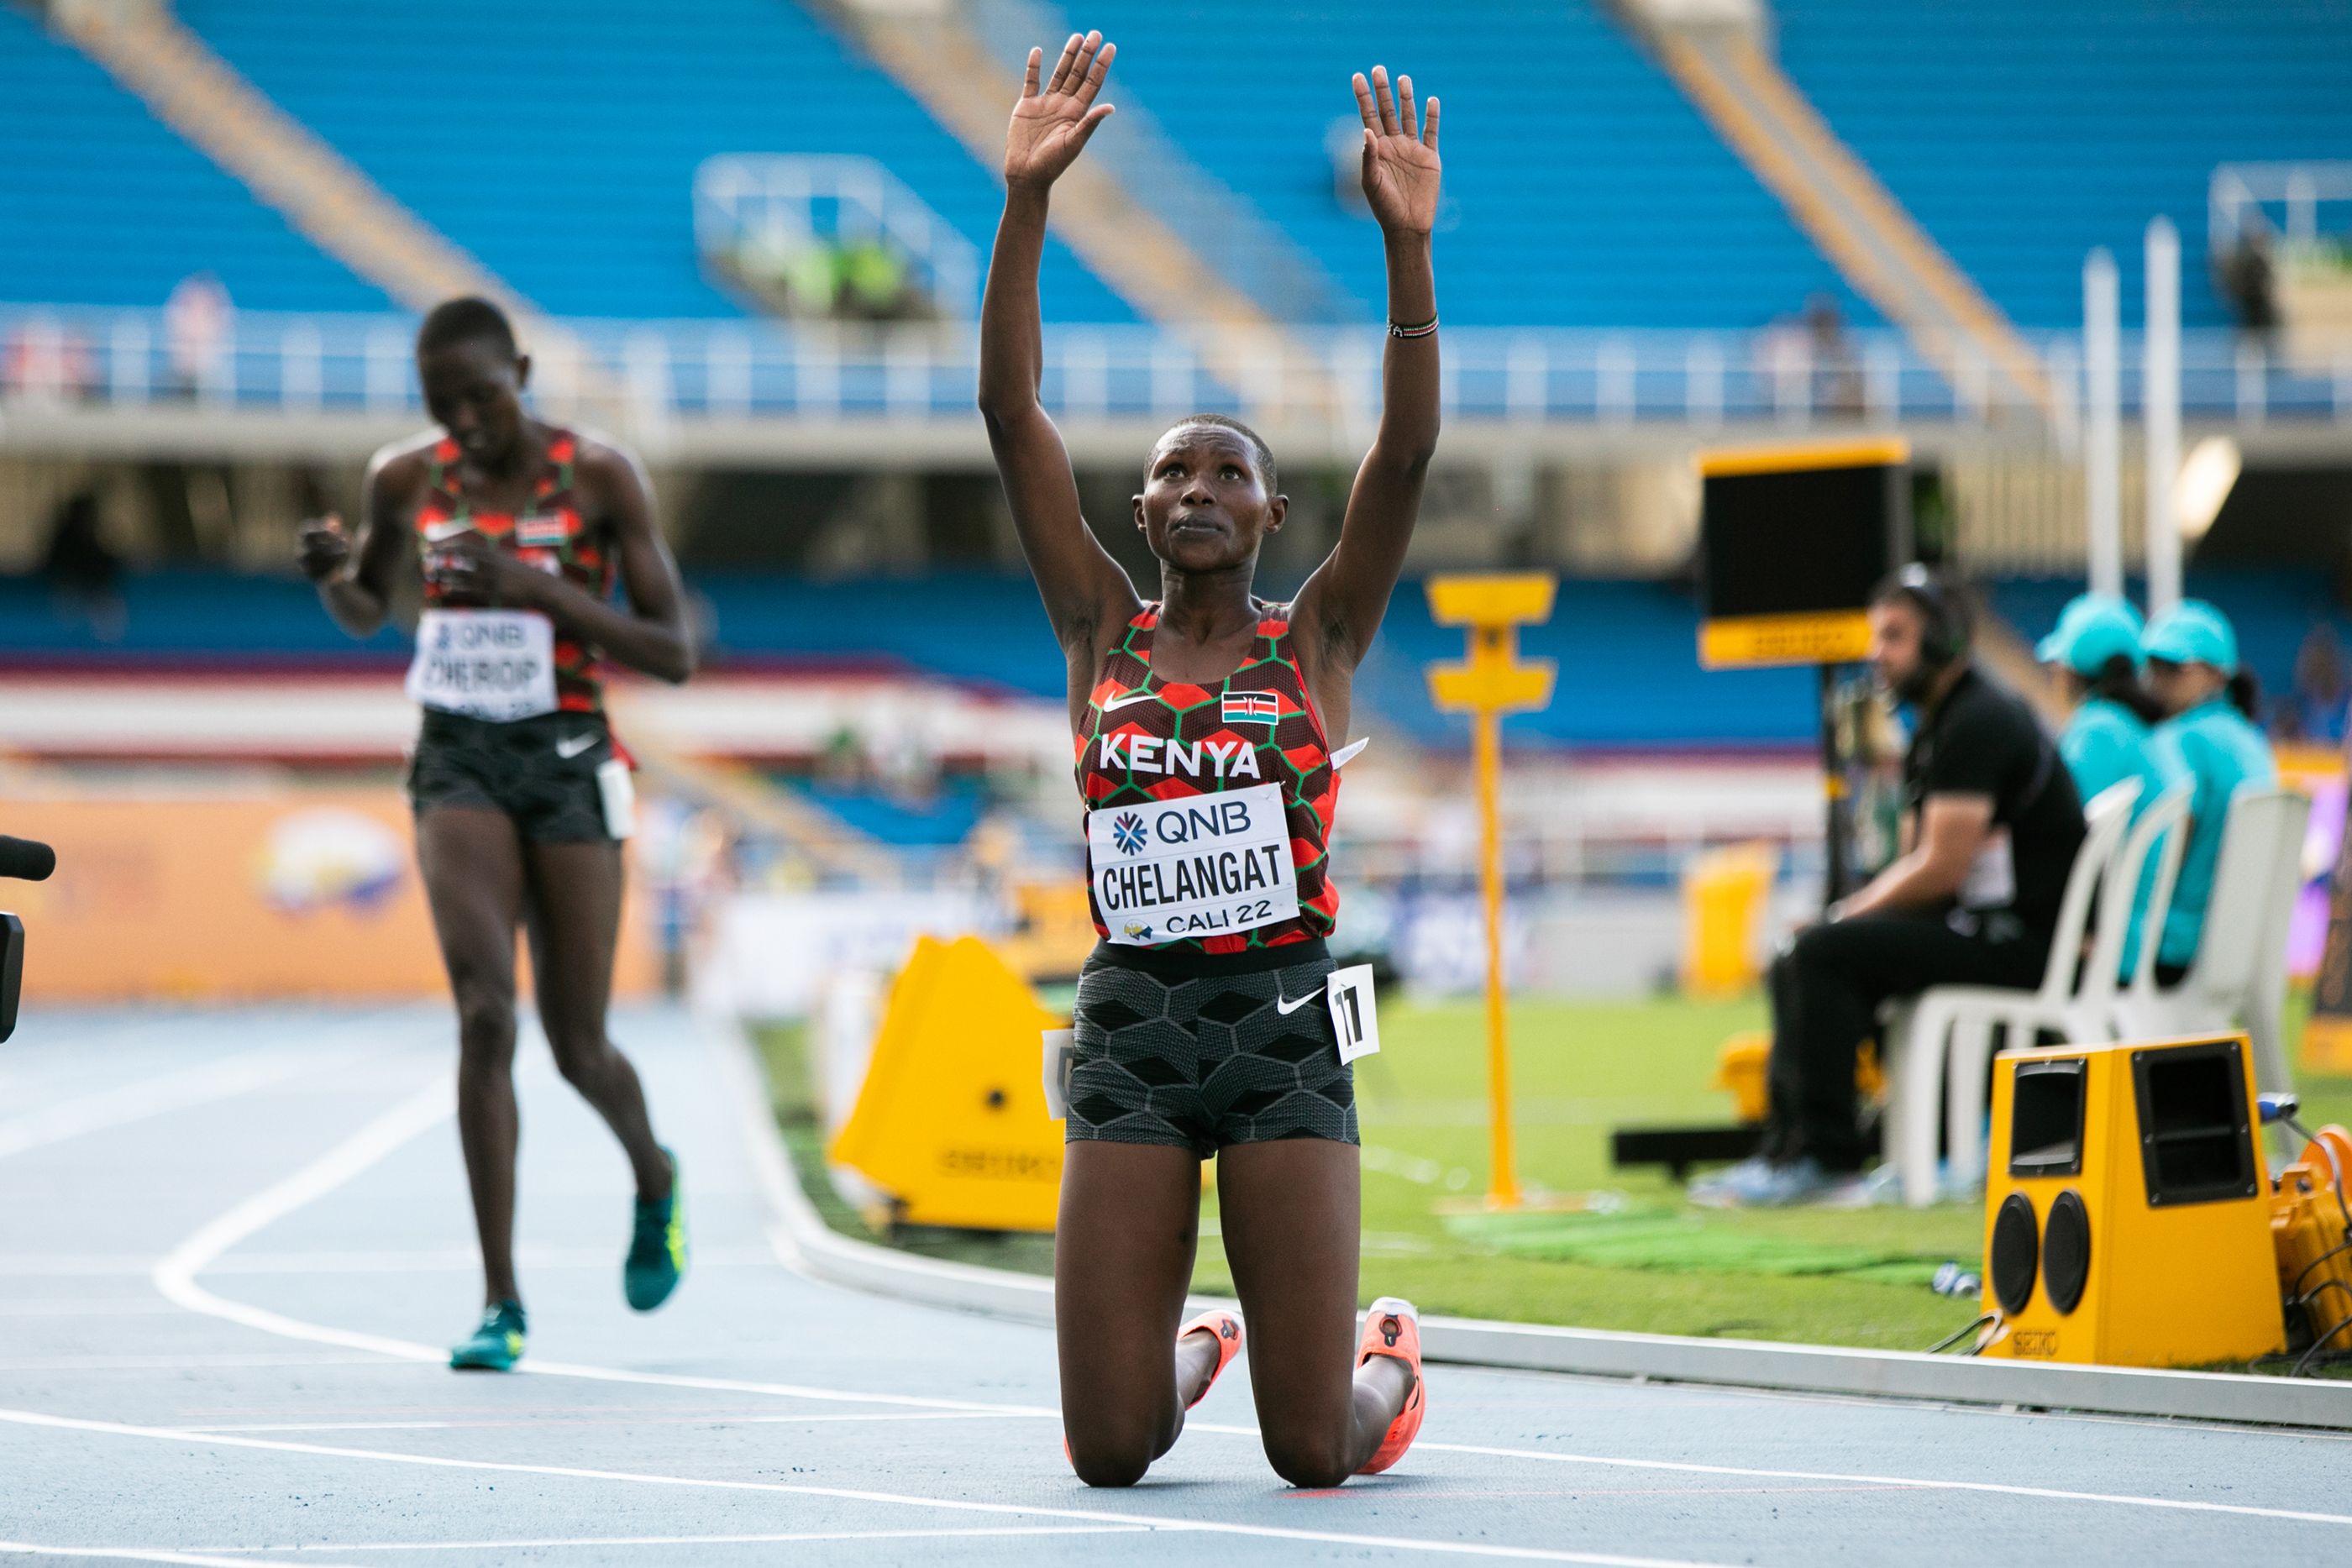 Kenya's Betty Chelangat celebrates her 3000m win at the World Athletics U20 Championships Cali 22